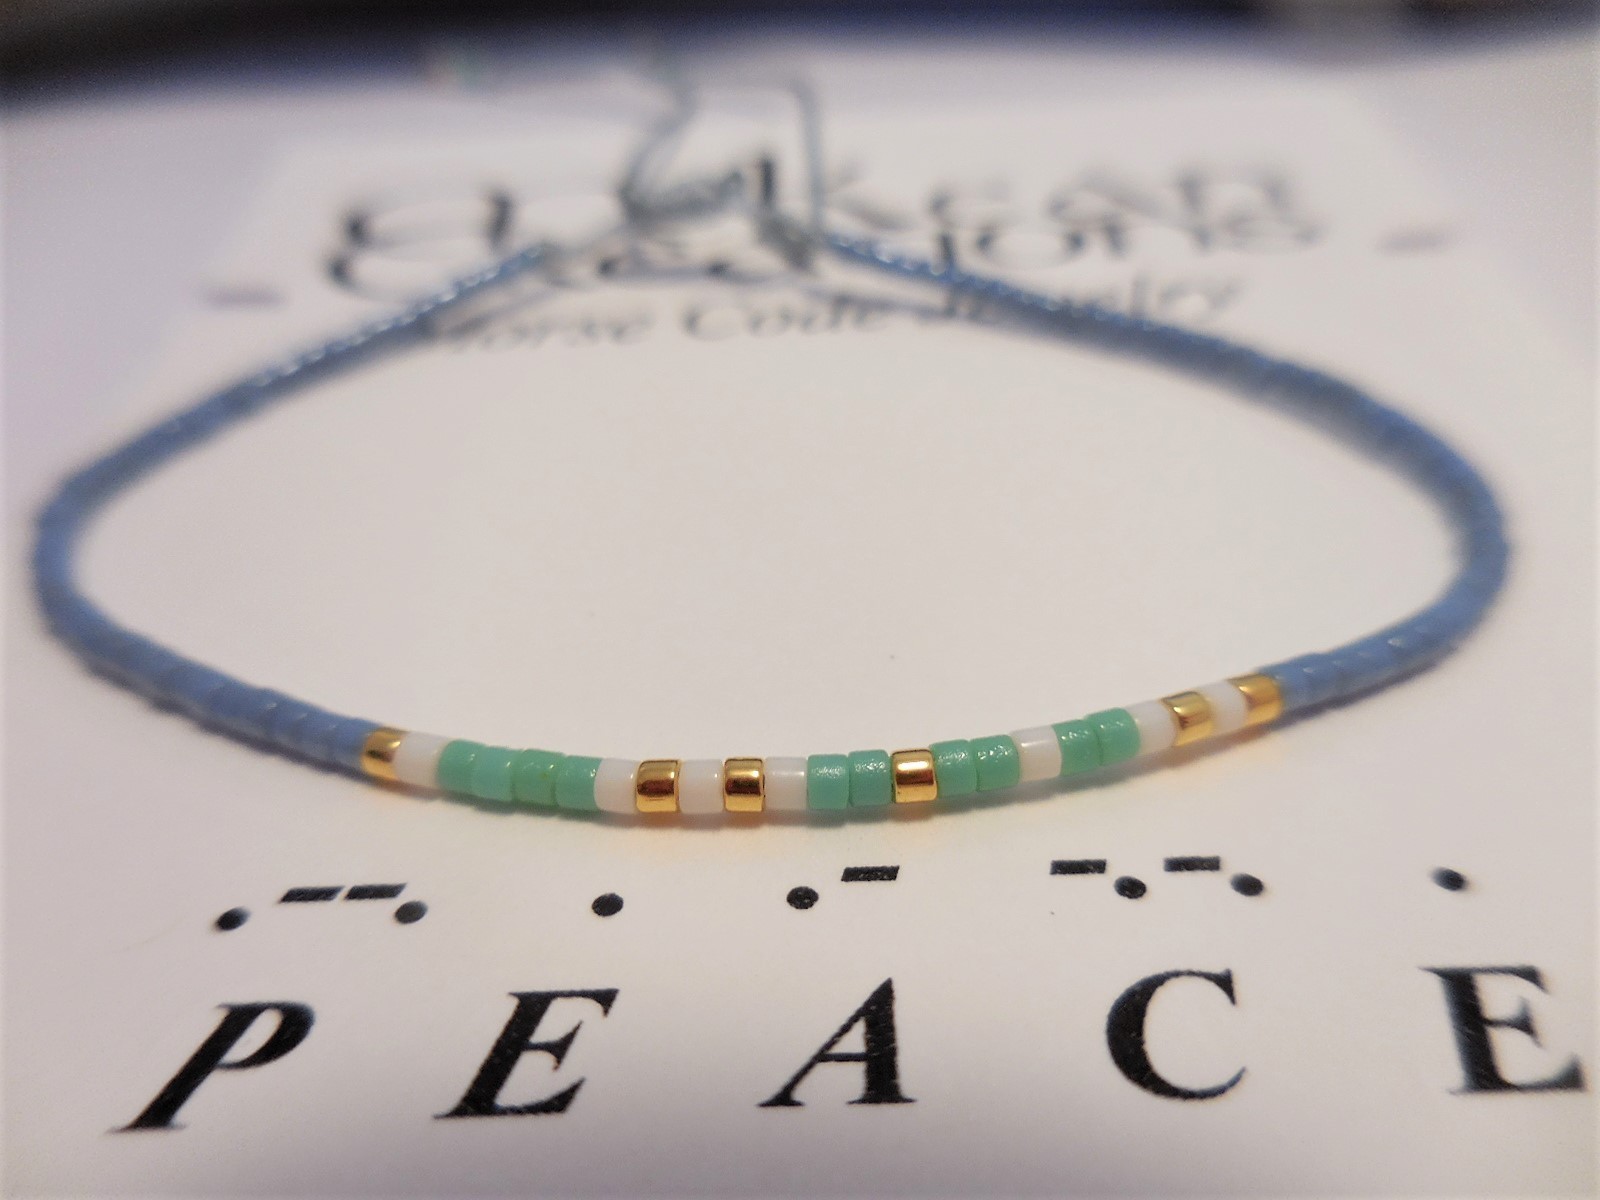 Peace Morse Code Bracelet, Friendship Bracelet